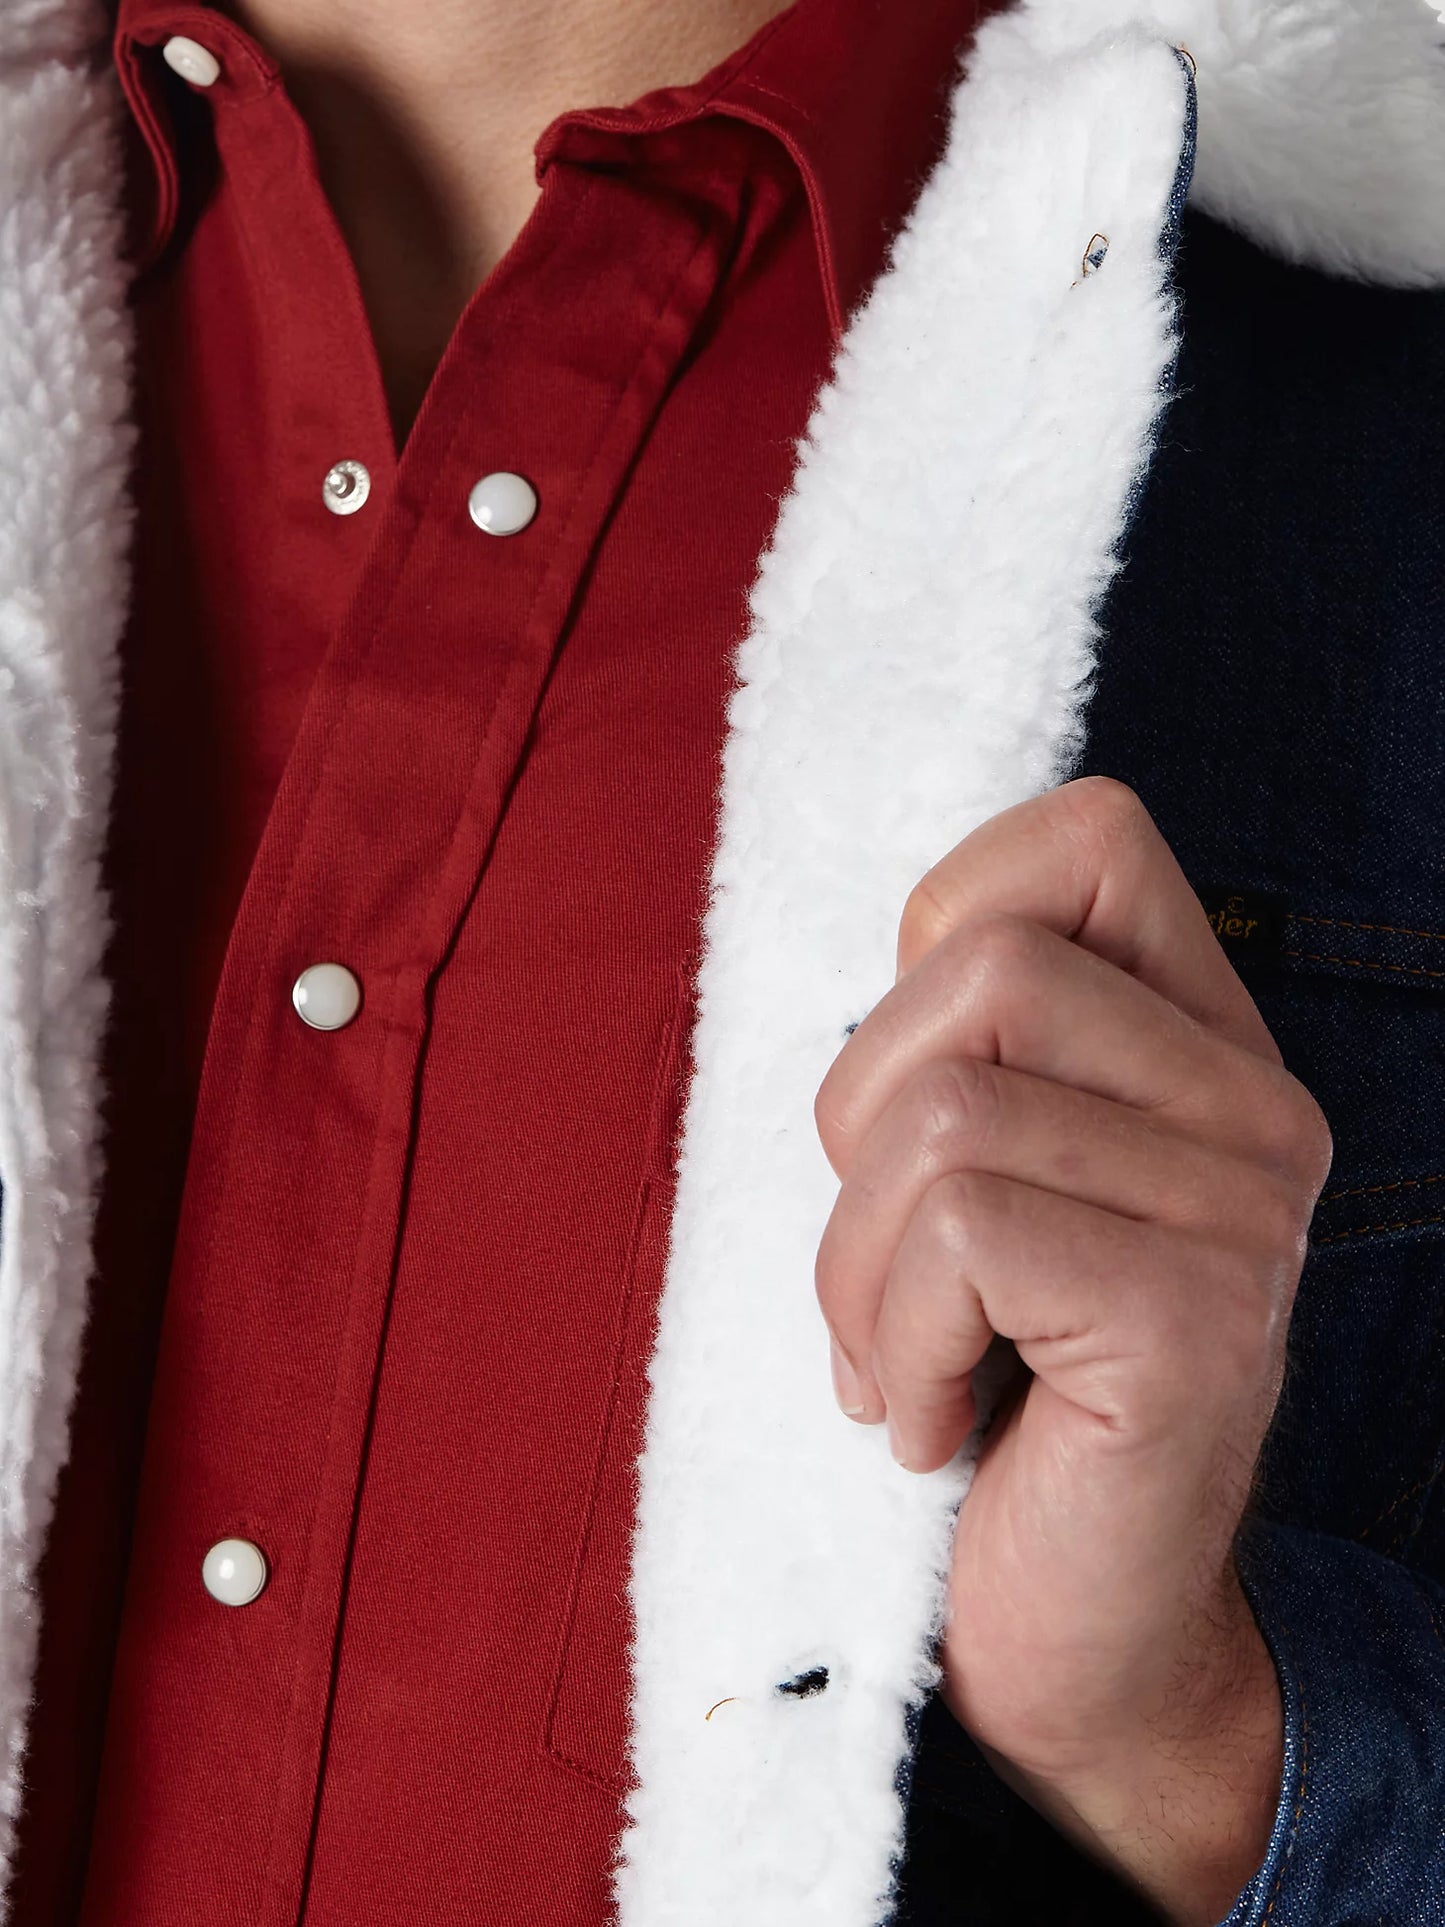 Wrangler® Men's Sherpa Lined Button Front Western Denim Jacket